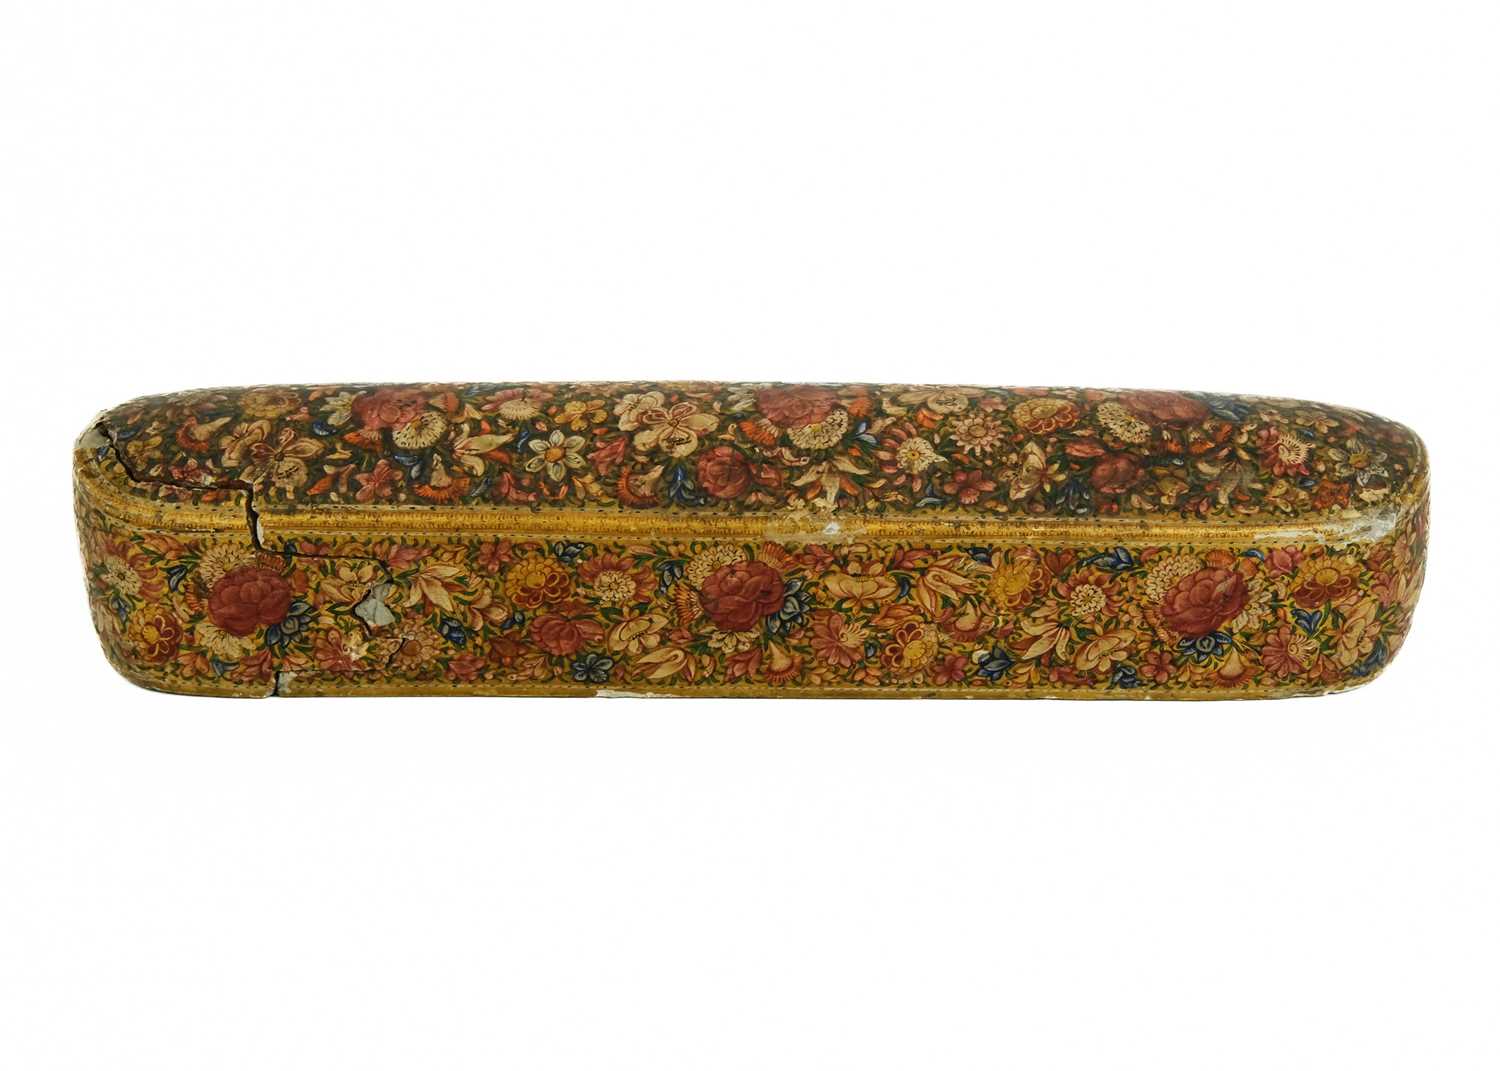 A Qajar lacquer pen box (qalamdan), Persia, 19th century. - Image 2 of 5